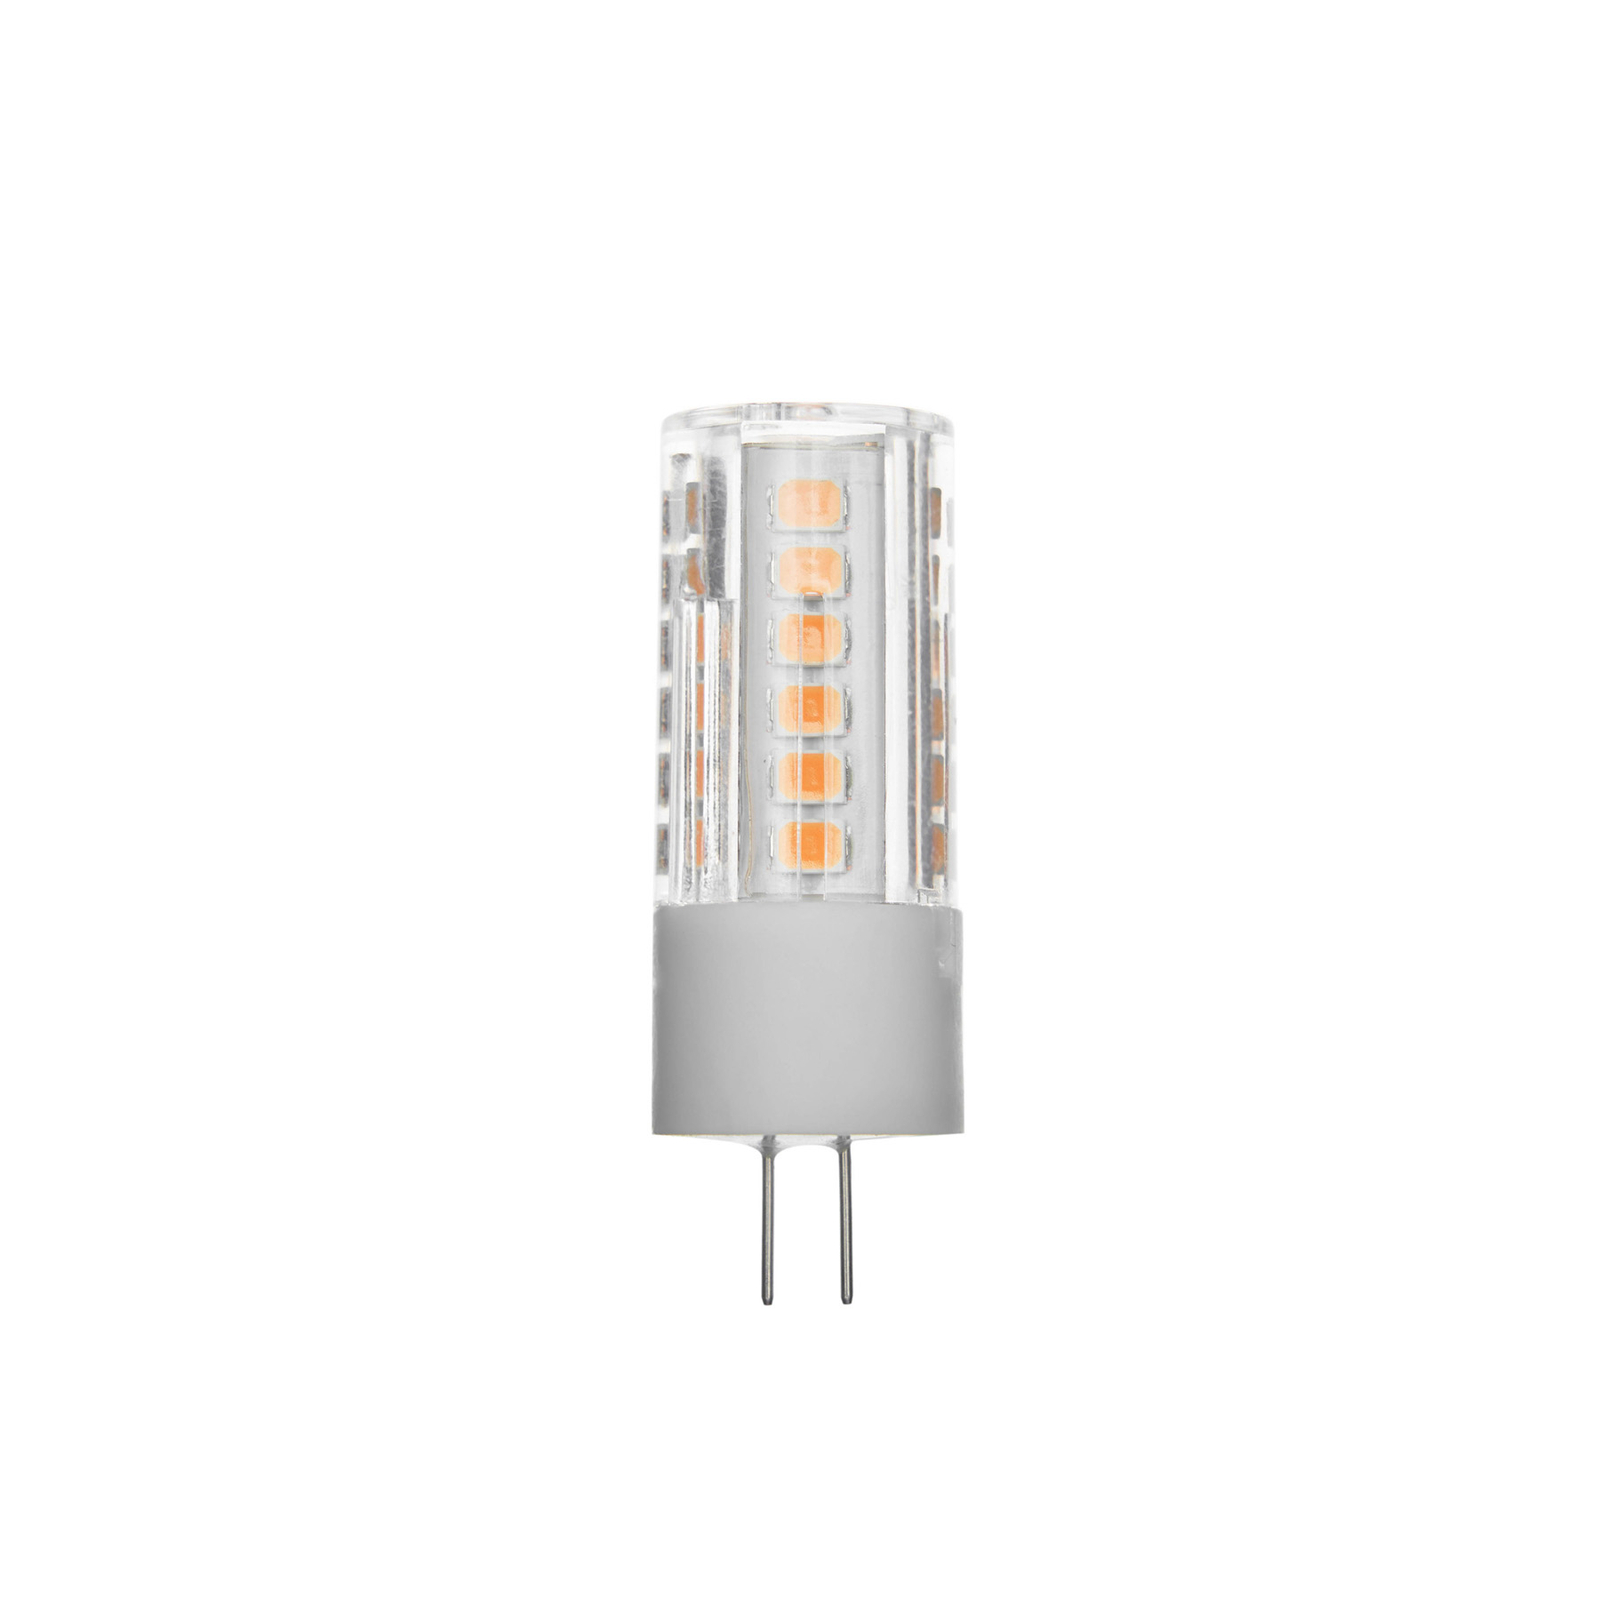 Arcchio LED stiftlamp G4 3,4W 2.700K per 3